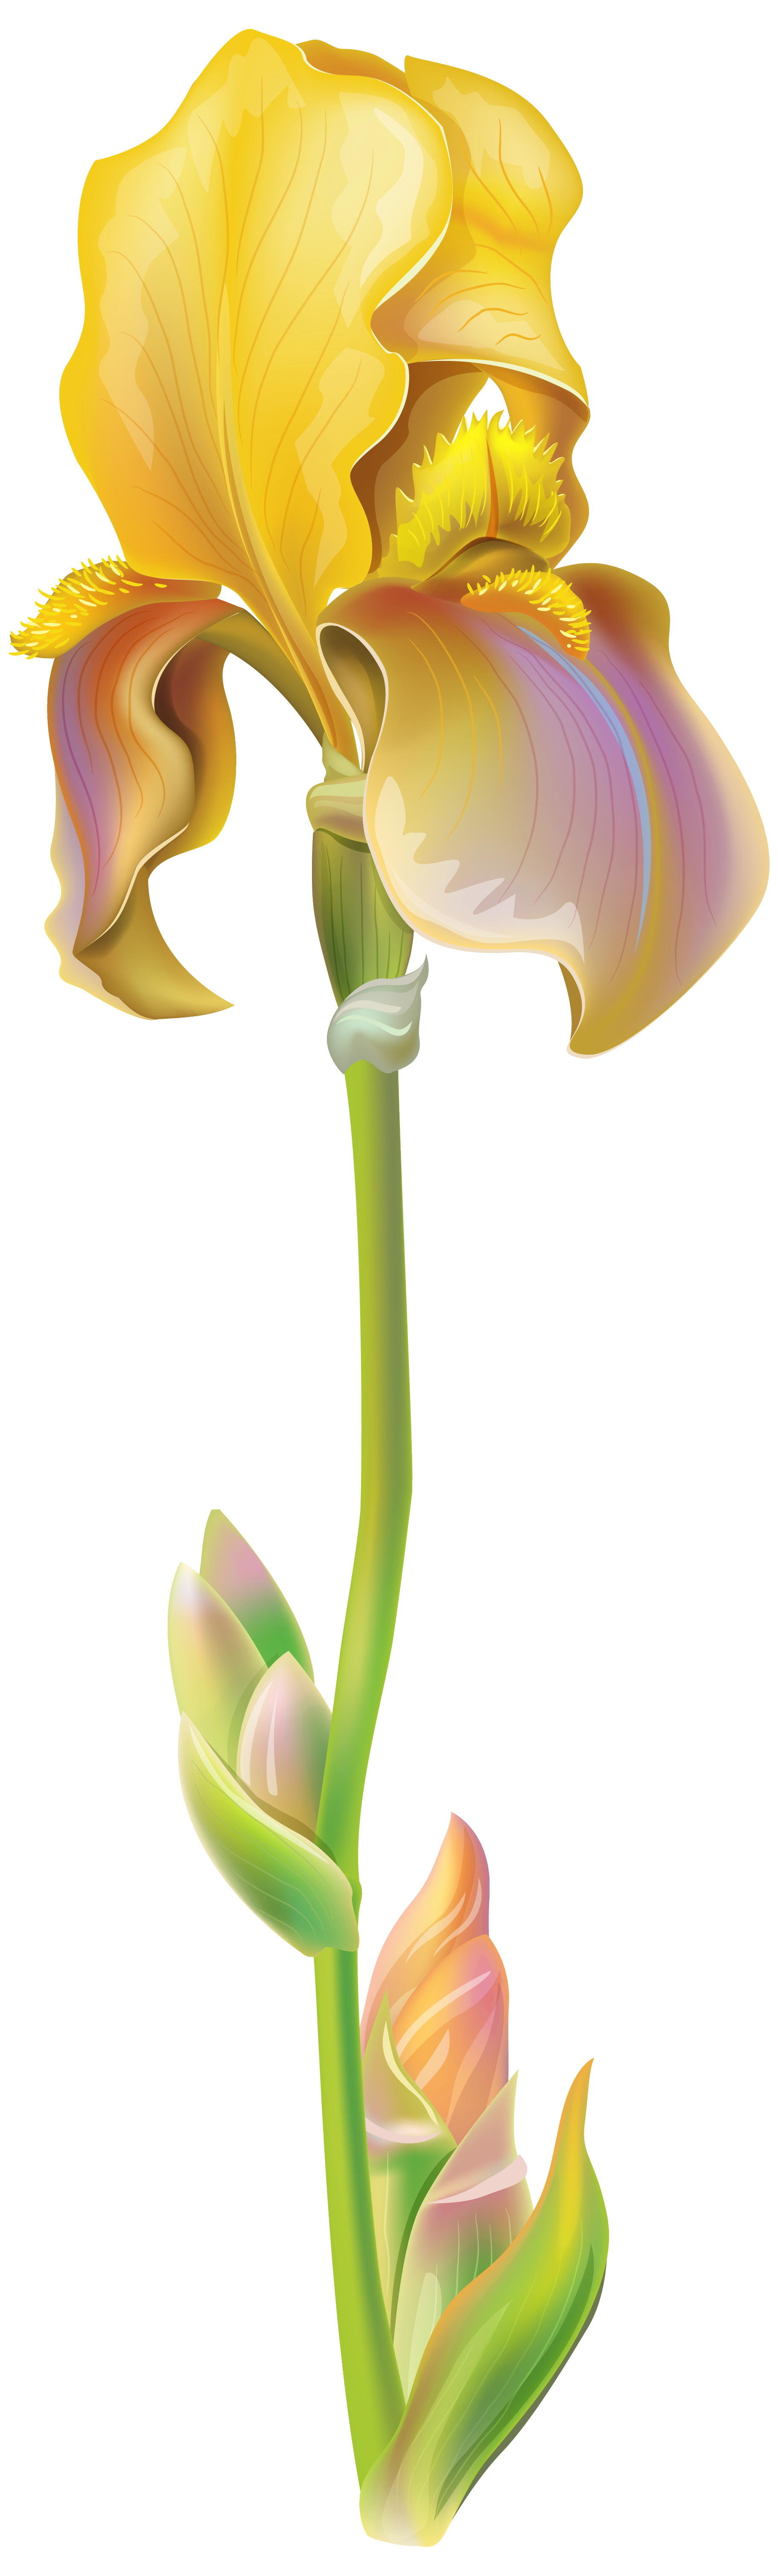 Iris flower png. Purple clipart image gallery